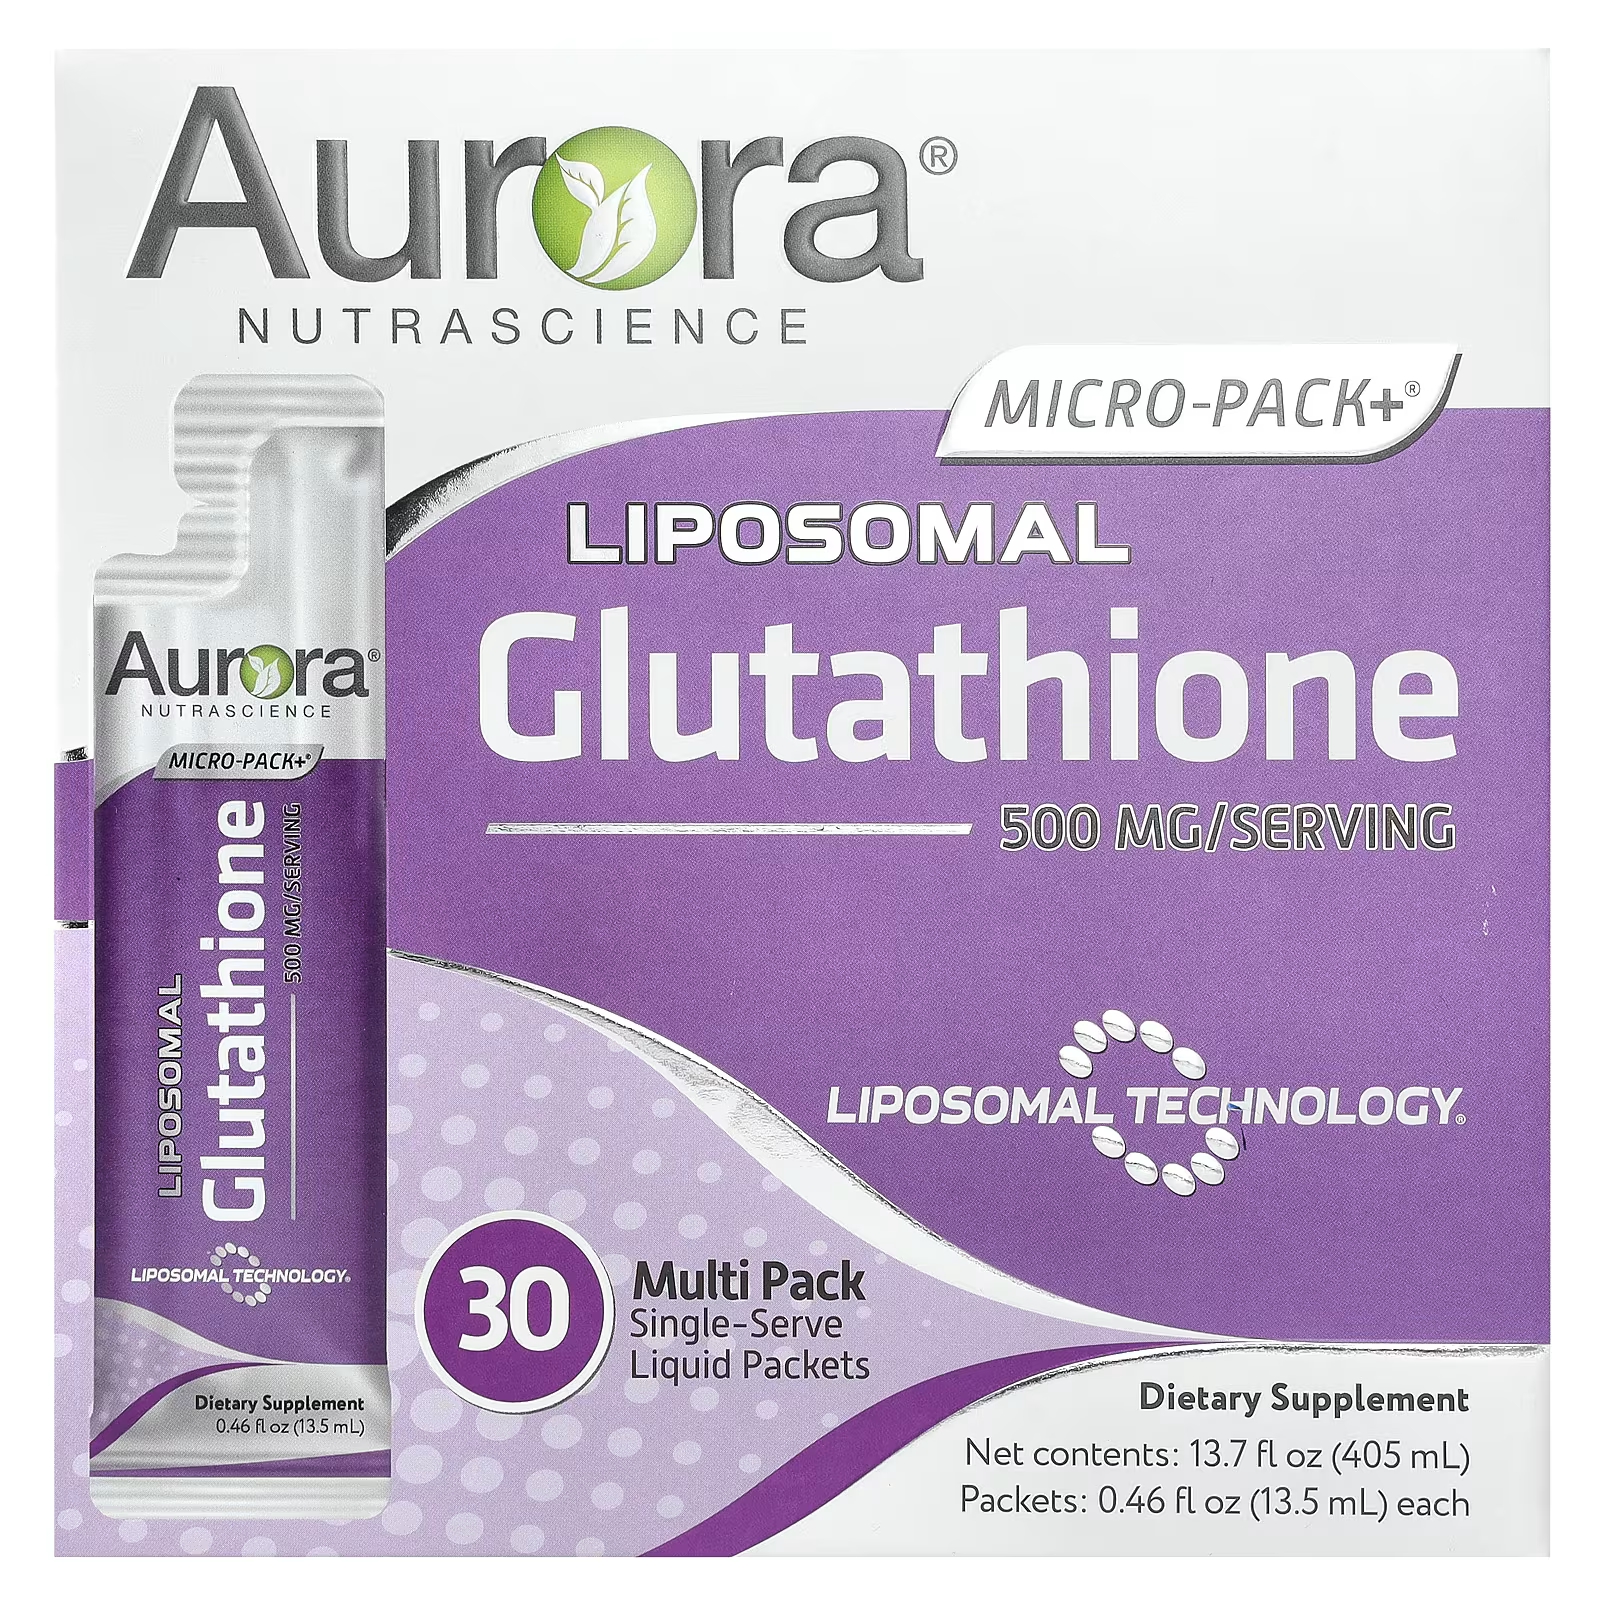 Aurora Nutrascience Micro-Pack+ липосомальный глутатион 500 мг 30 одноразовых пакетов с жидкостью по 0,46 жидких унций (13,5 мл) каждый биодобавка липосомальный глутатион 100мл